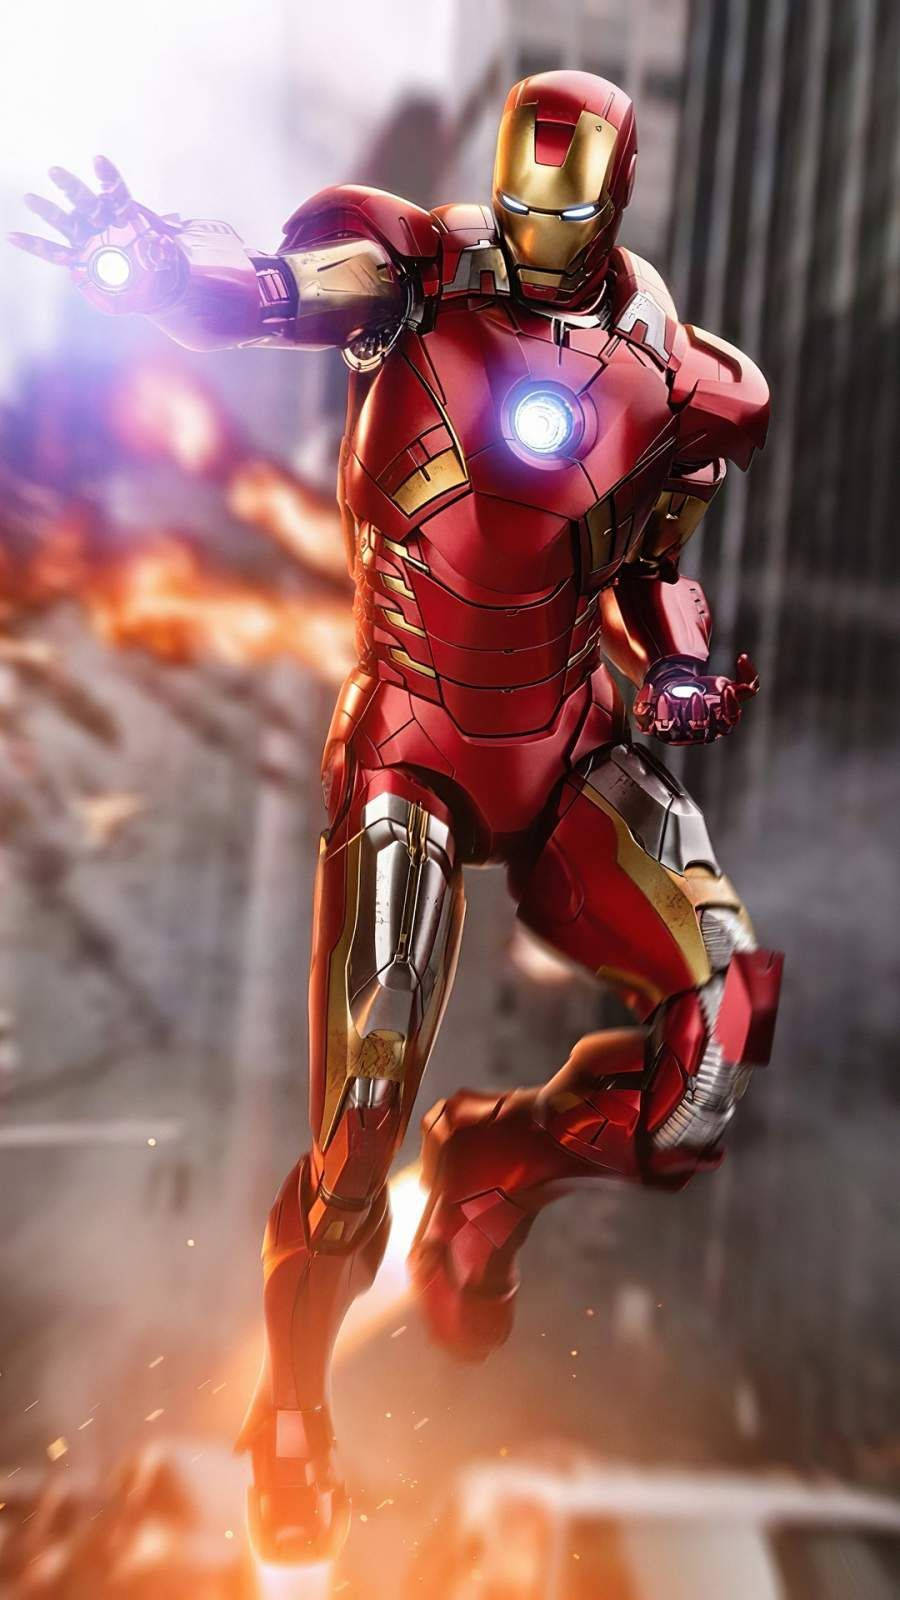 Superhero Iron Man In Action Wallpaper